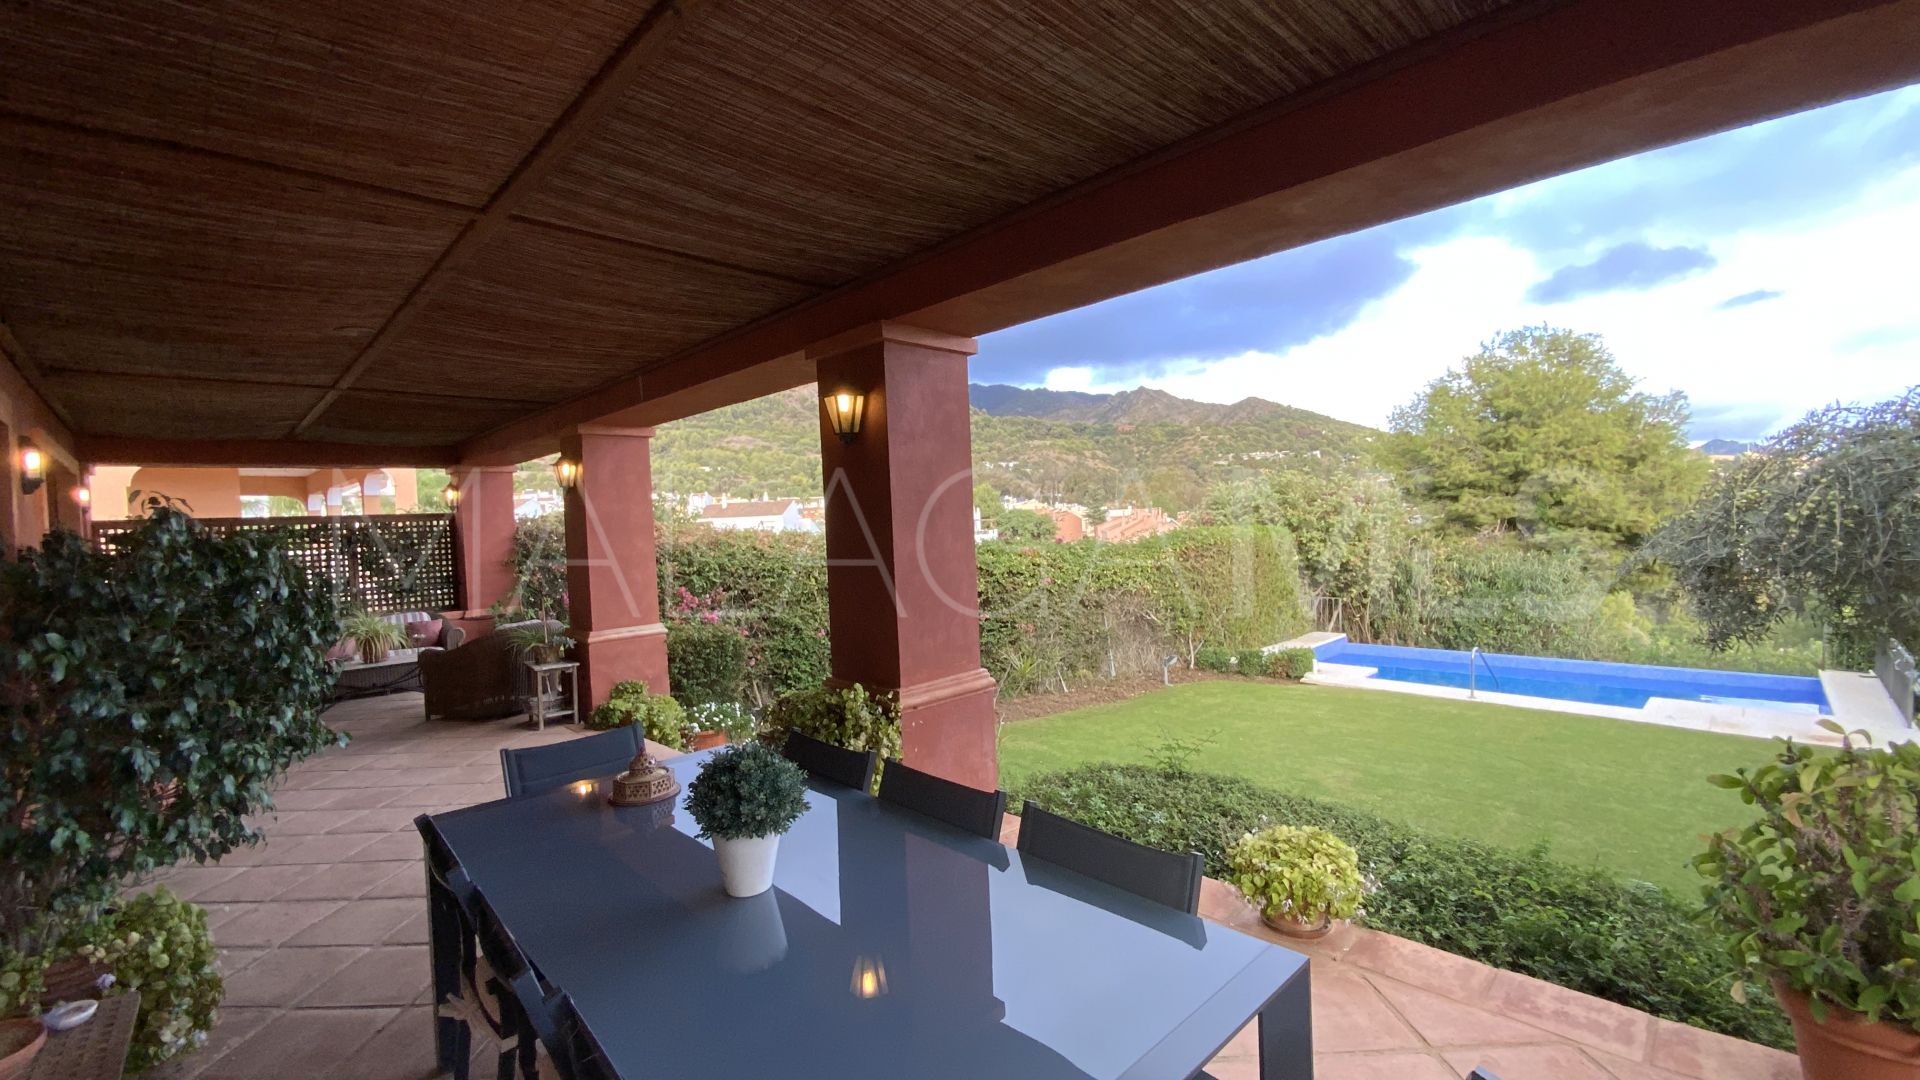 Xarblanca, villa for sale with 4 bedrooms